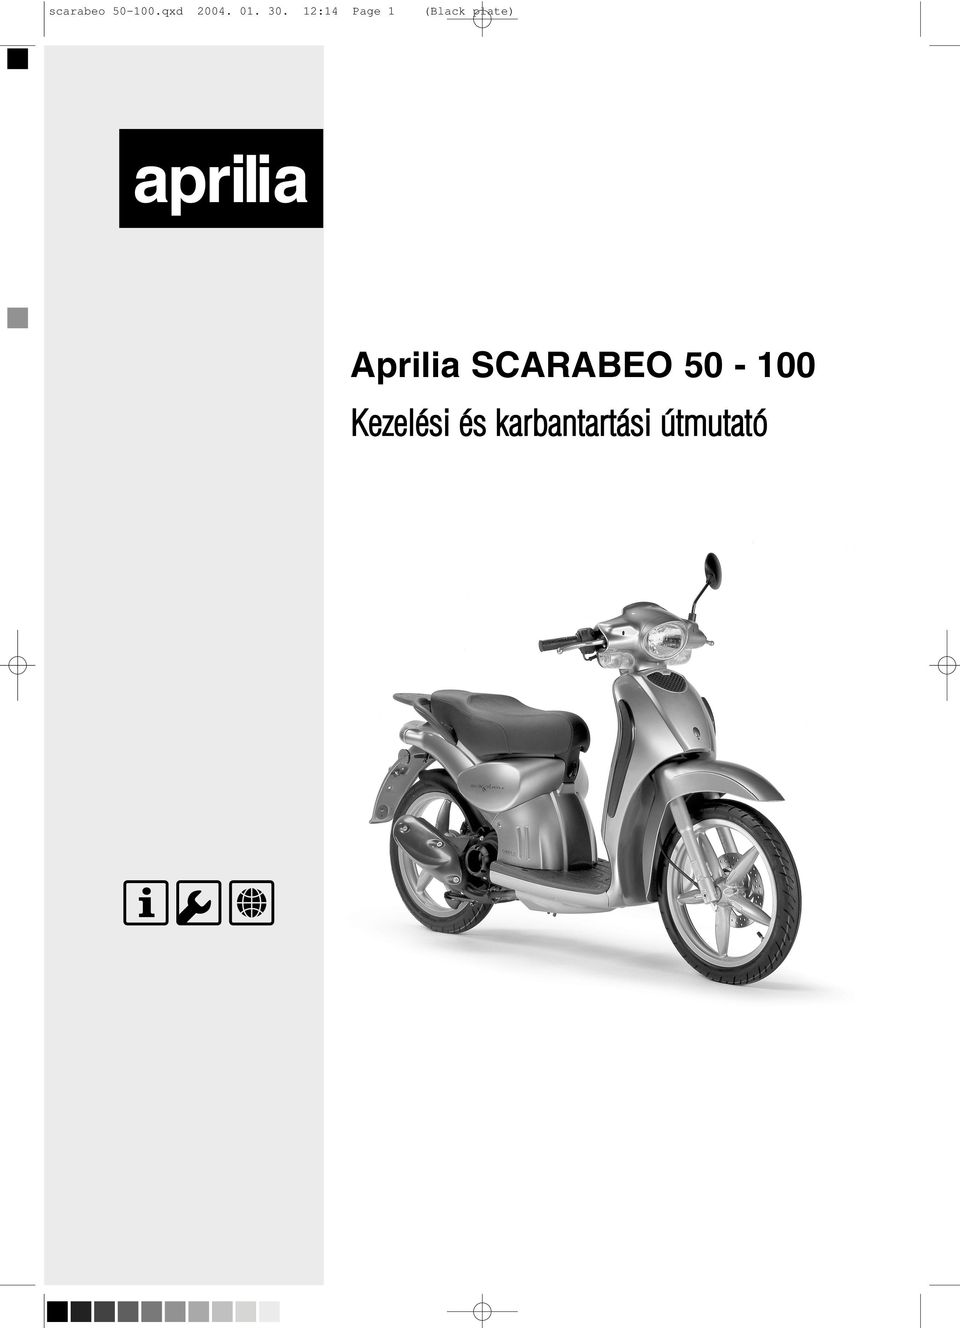 scarabeo qxd :14 Page 1 Aprilia SCARABEO - PDF Free Download